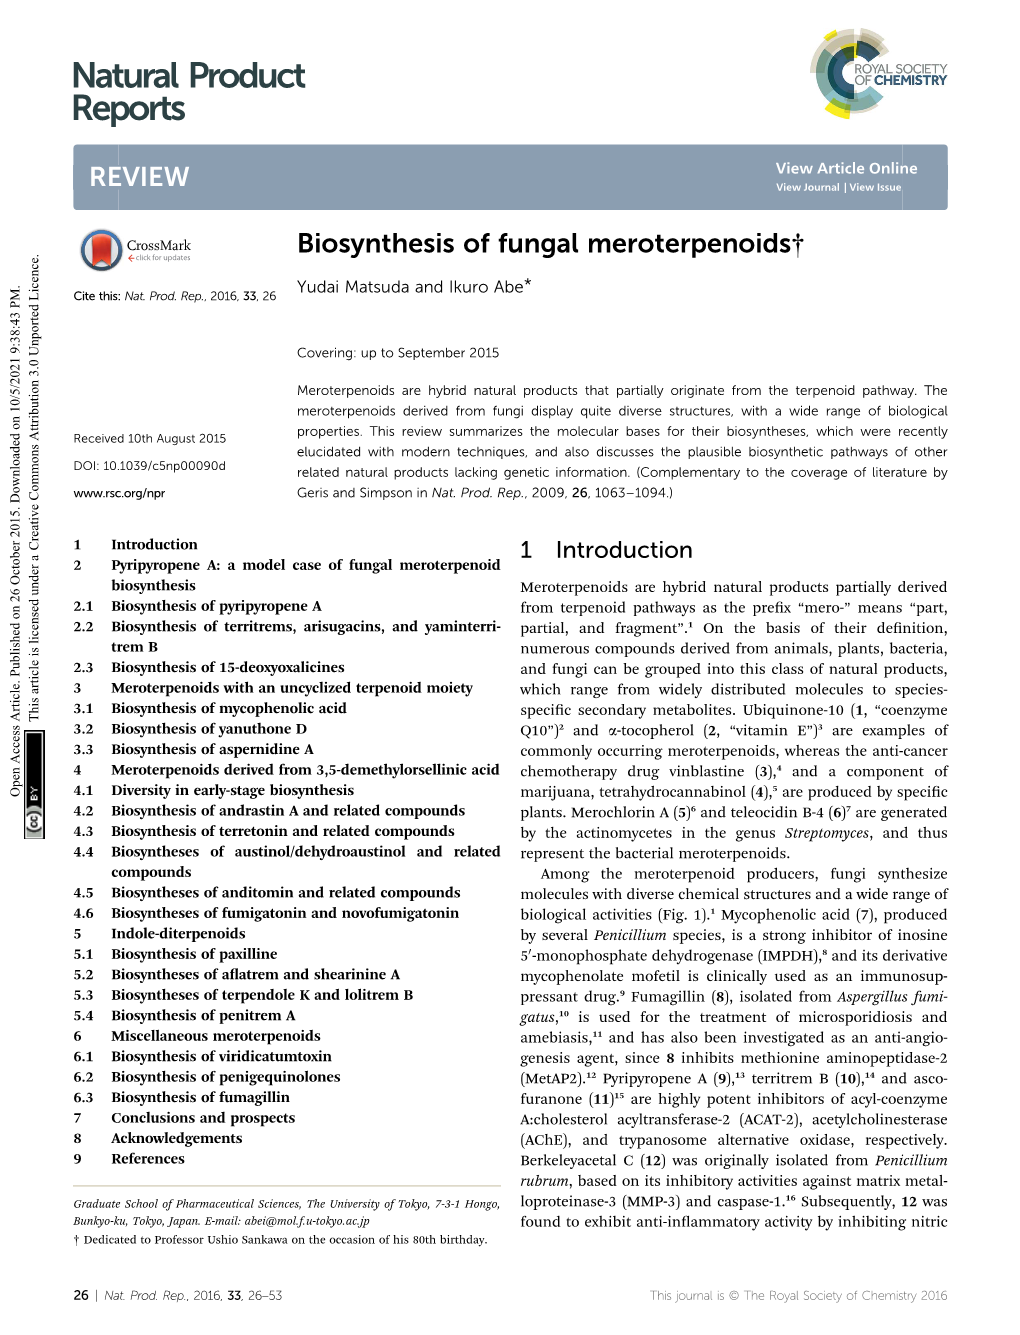 Biosynthesis of Fungal Meroterpenoids†